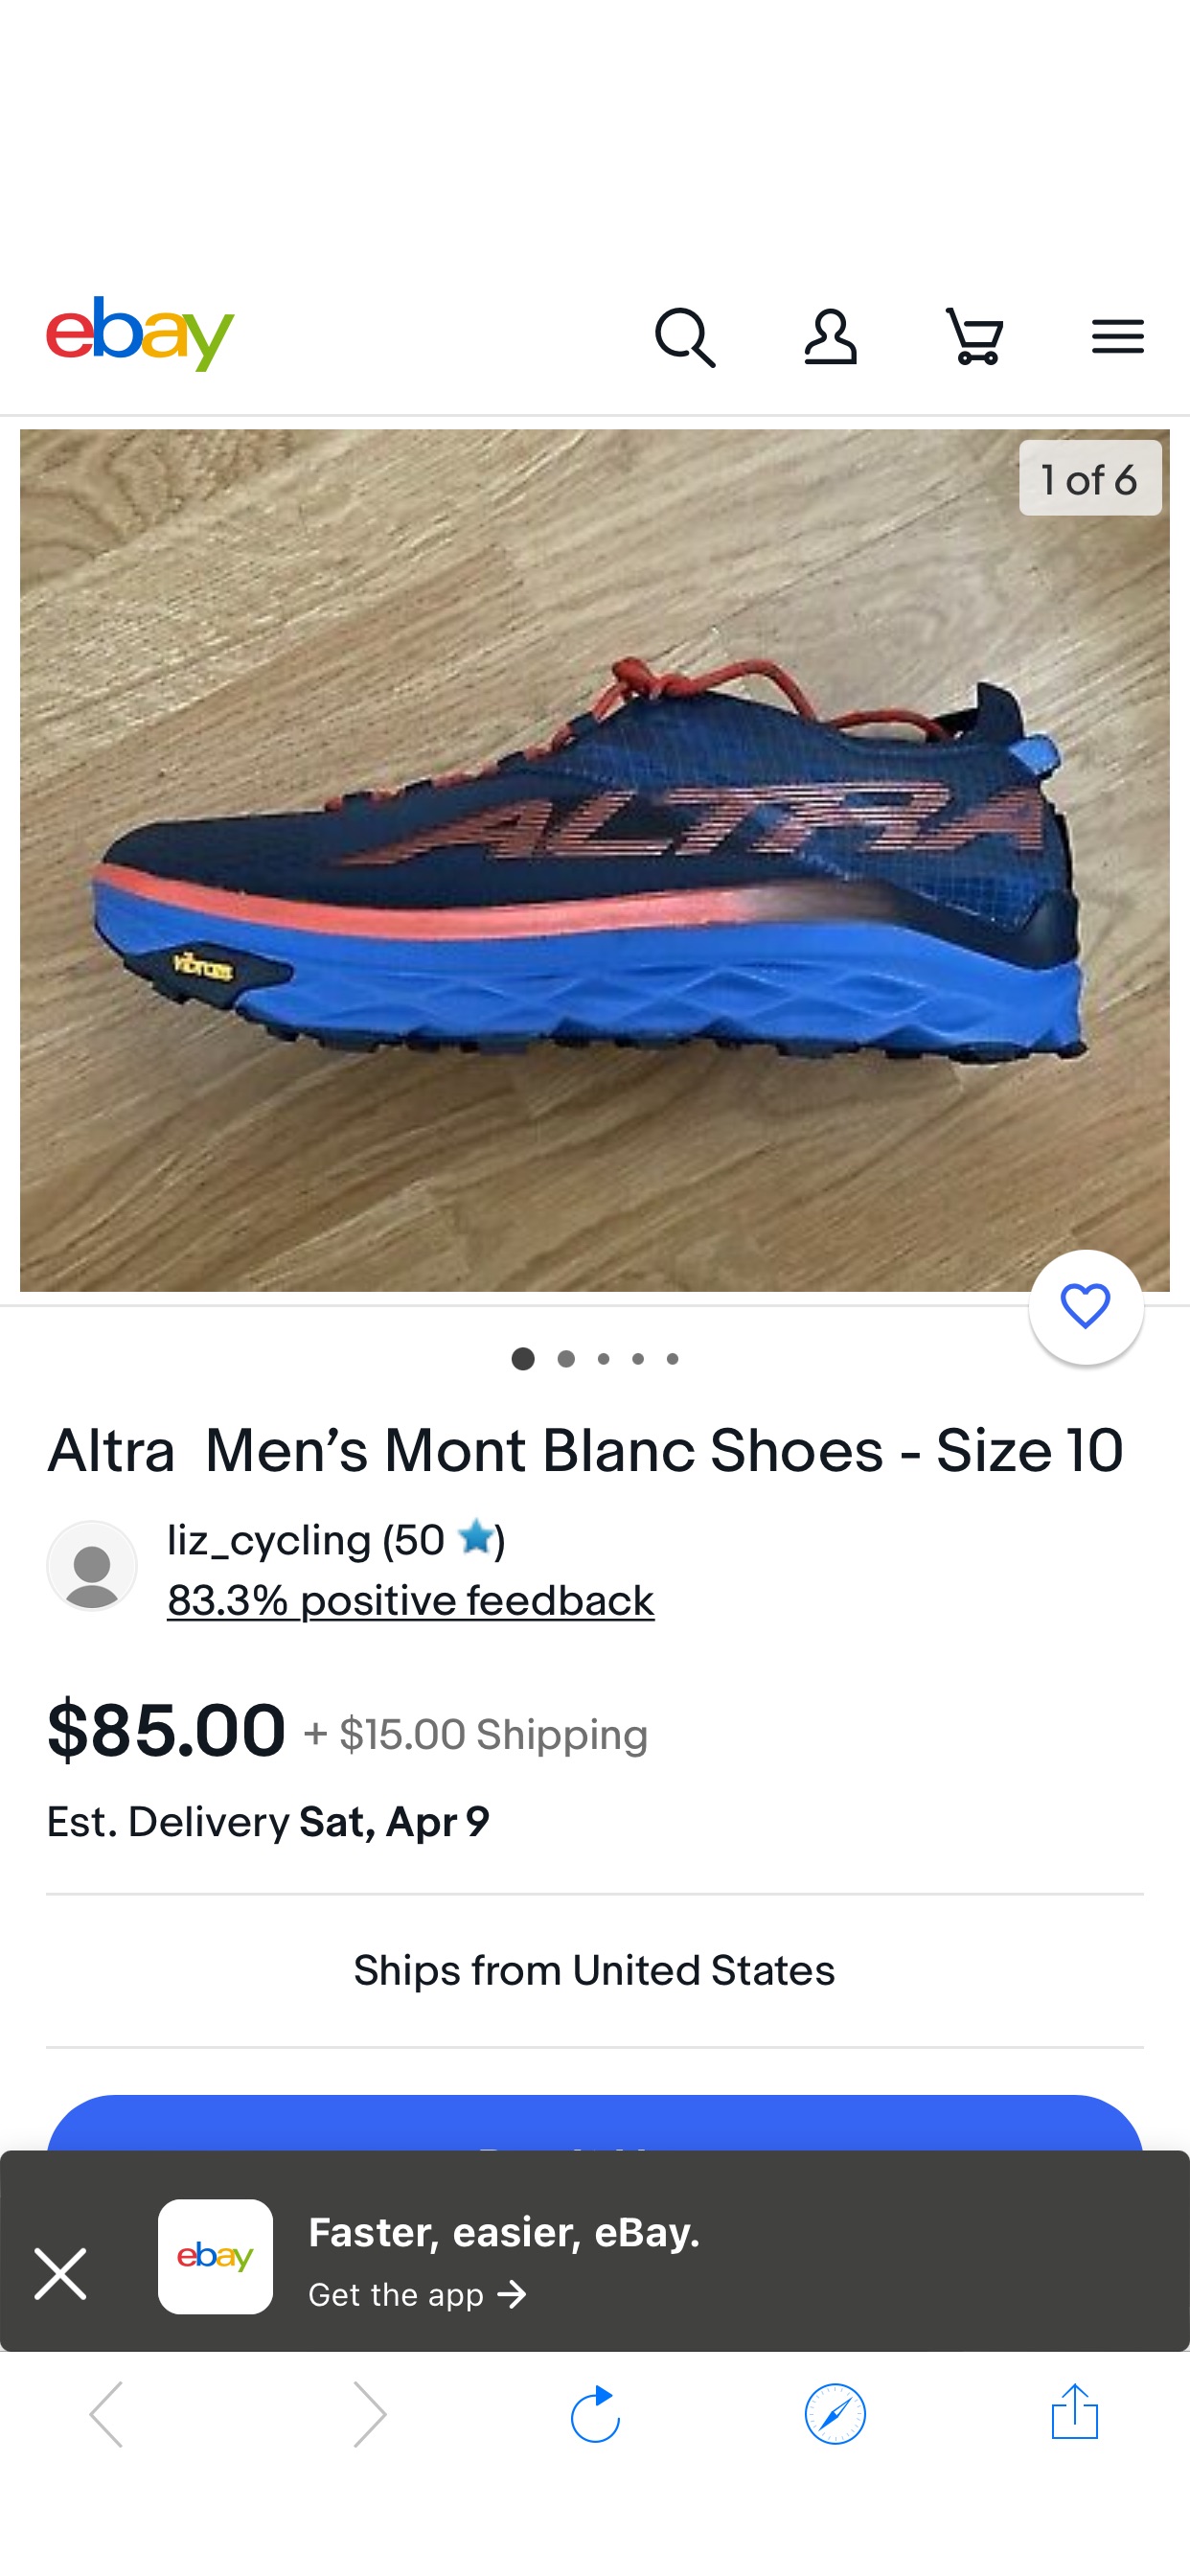 Altra Men’s Mont Blanc Shoes - Size 10 | eBay
男士顶级回弹轻量越野跑鞋